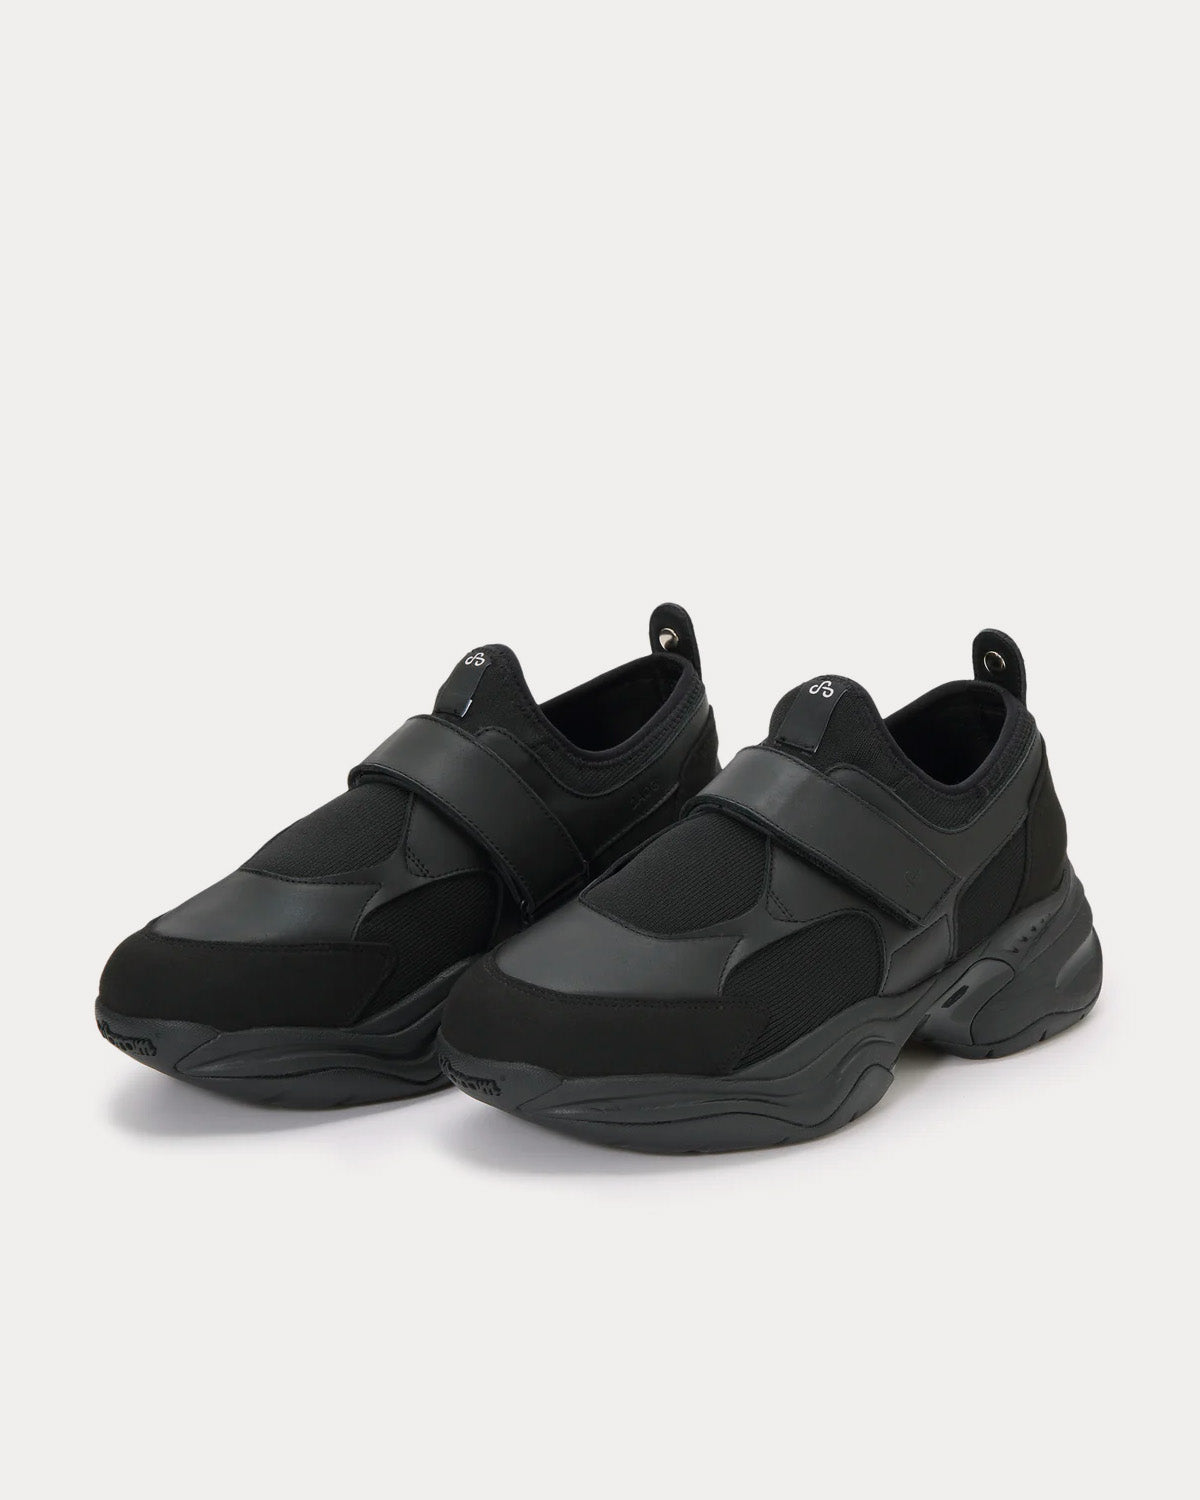 OAO - Wovent Black Slip On Sneakers